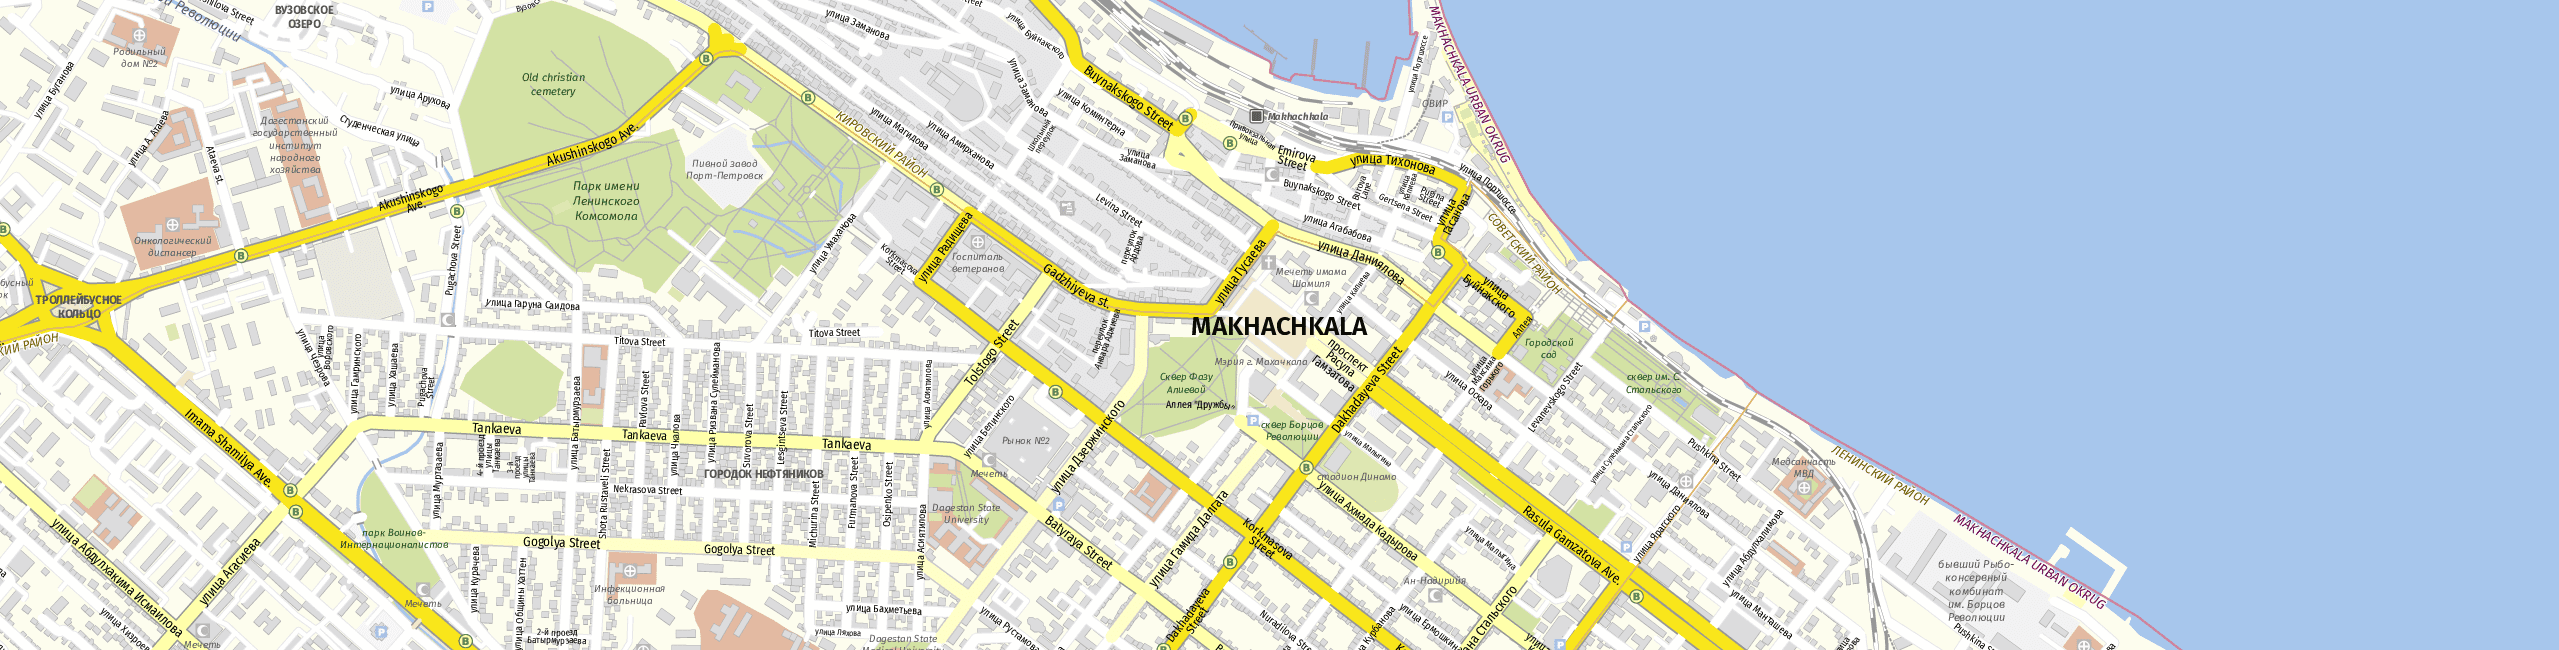 Stadtplan Makhachkala zum Downloaden.